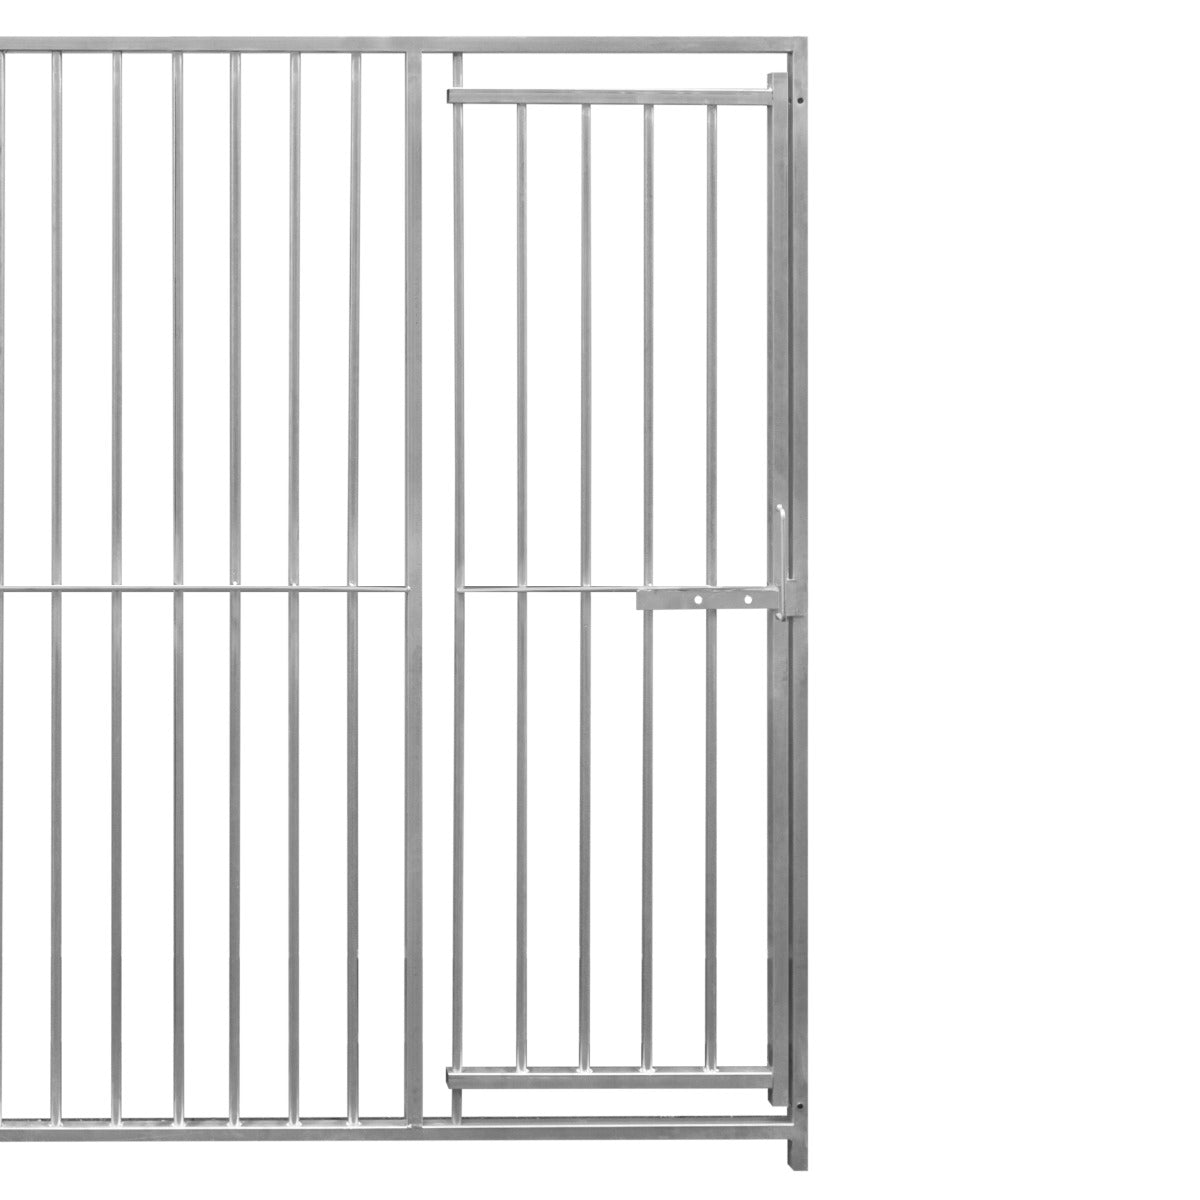 2m Dog Run Panel With Door – 5cm Bar Spacing